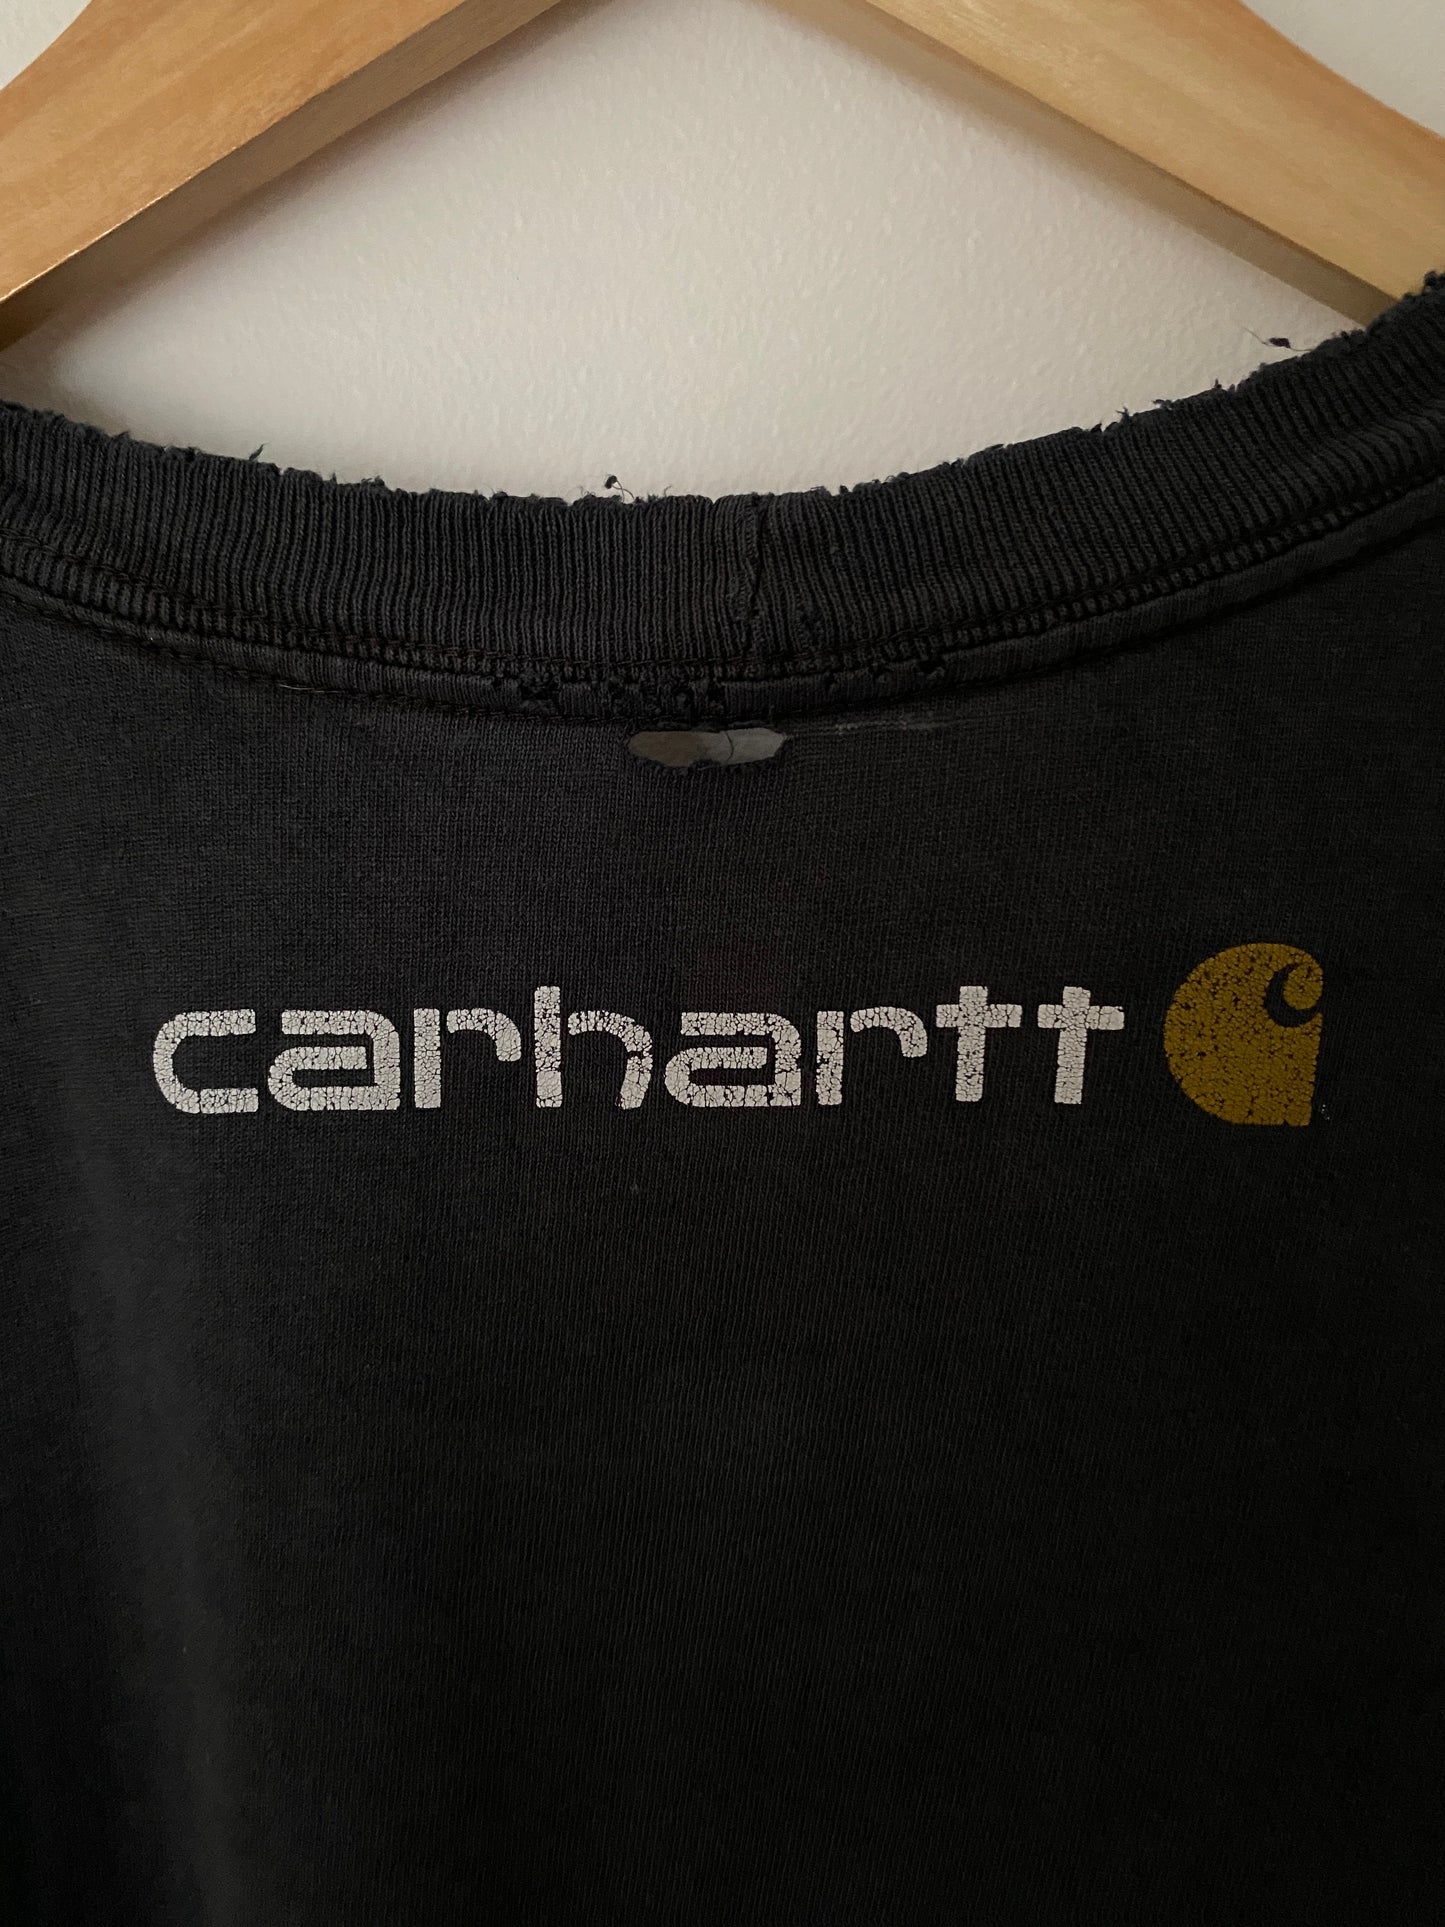 Carhartt K195 Graphic T-shirt - M